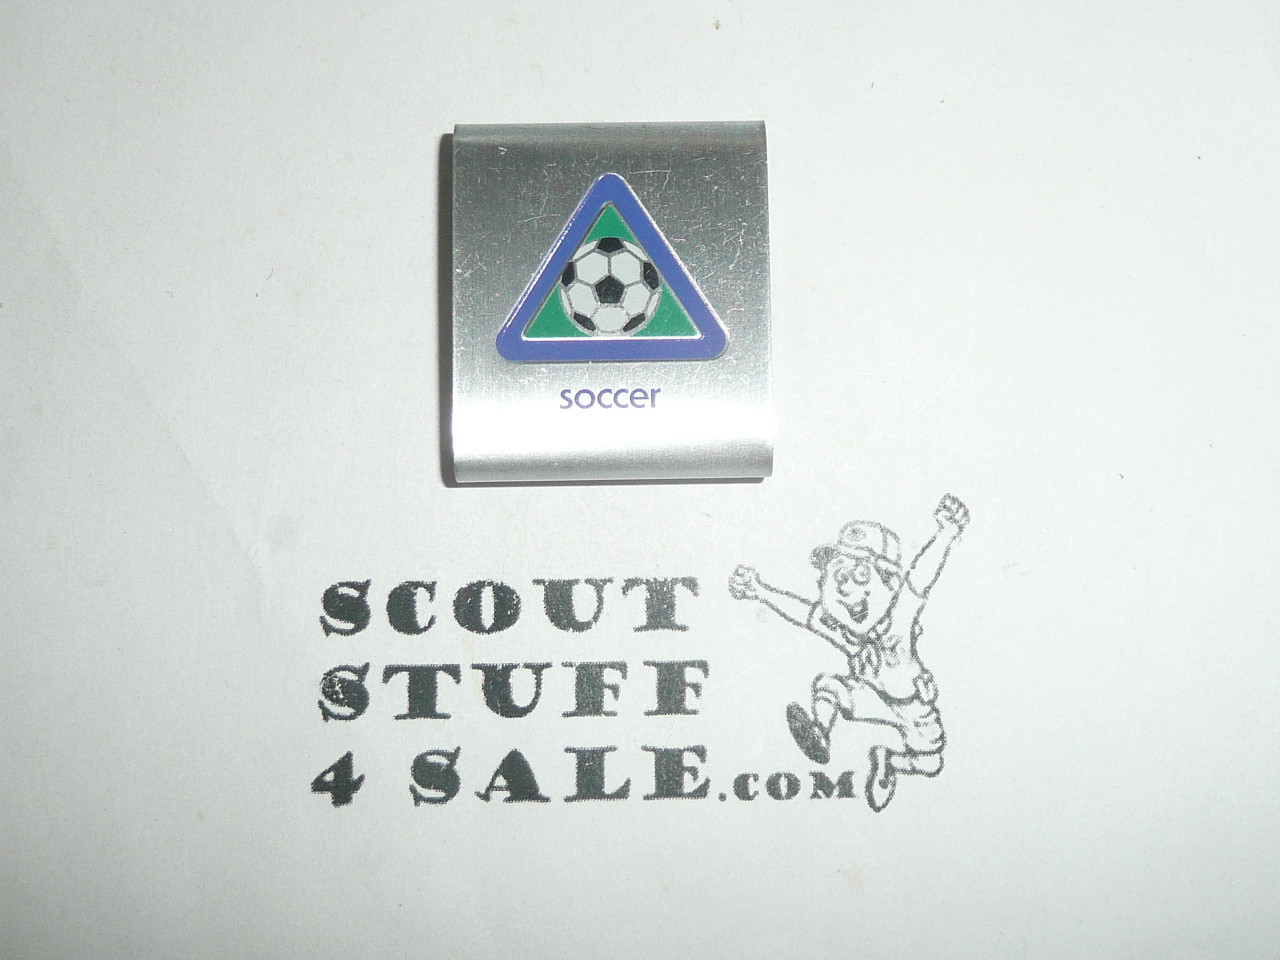 Soccer Cub Scout Activity Belt Loop